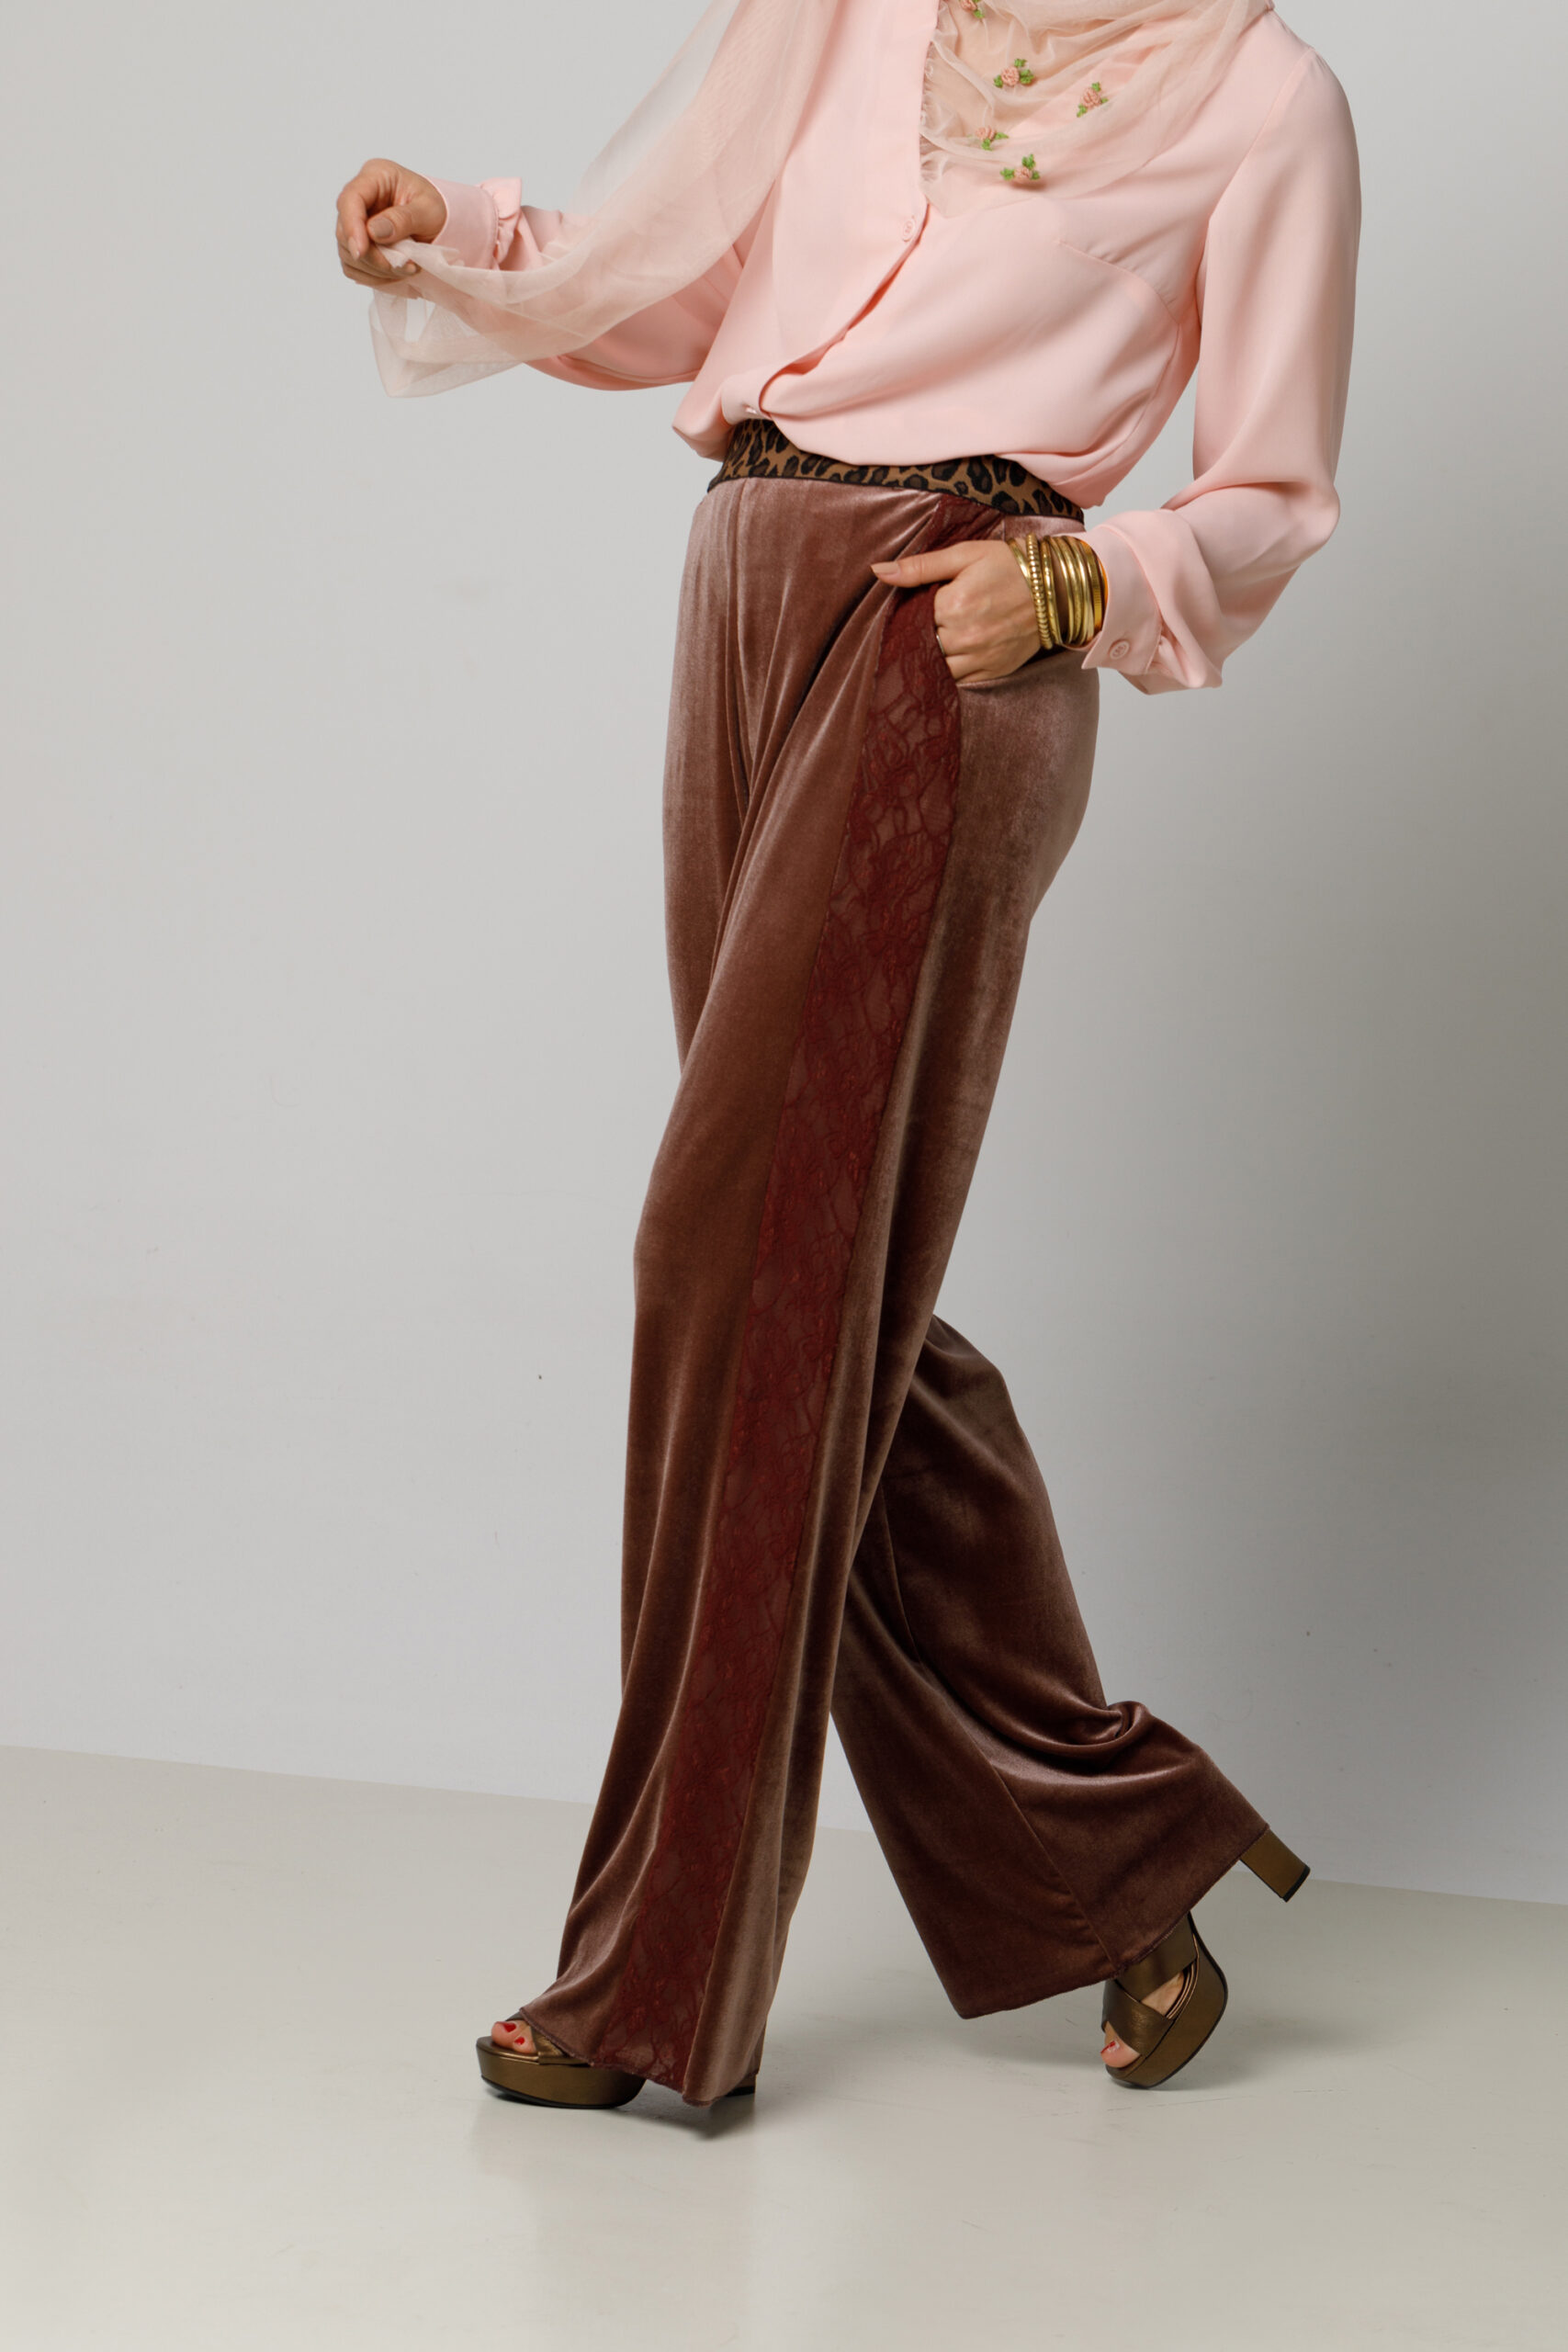 Pantalon MARIO maro cu banda laterala din dantela. Materiale naturale, design unicat, cu broderie si aplicatii handmade